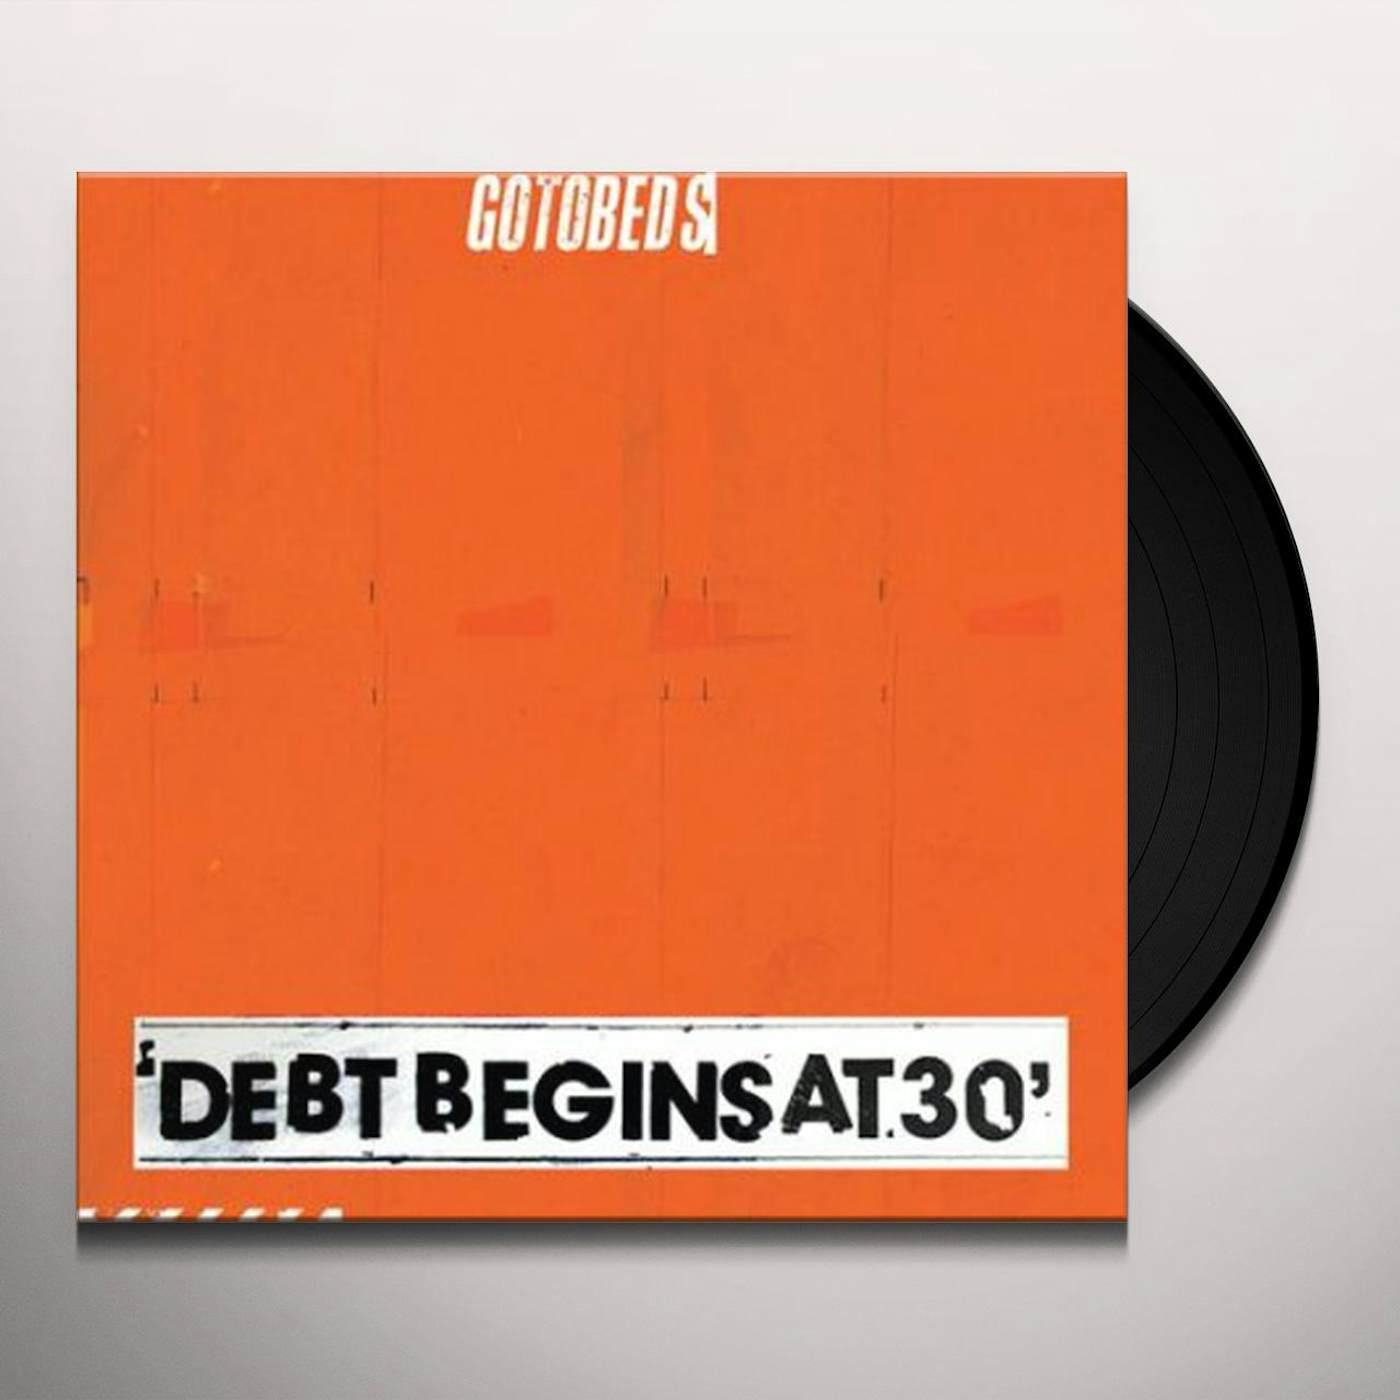 The Gotobeds Debt Begins at 30 Vinyl Record